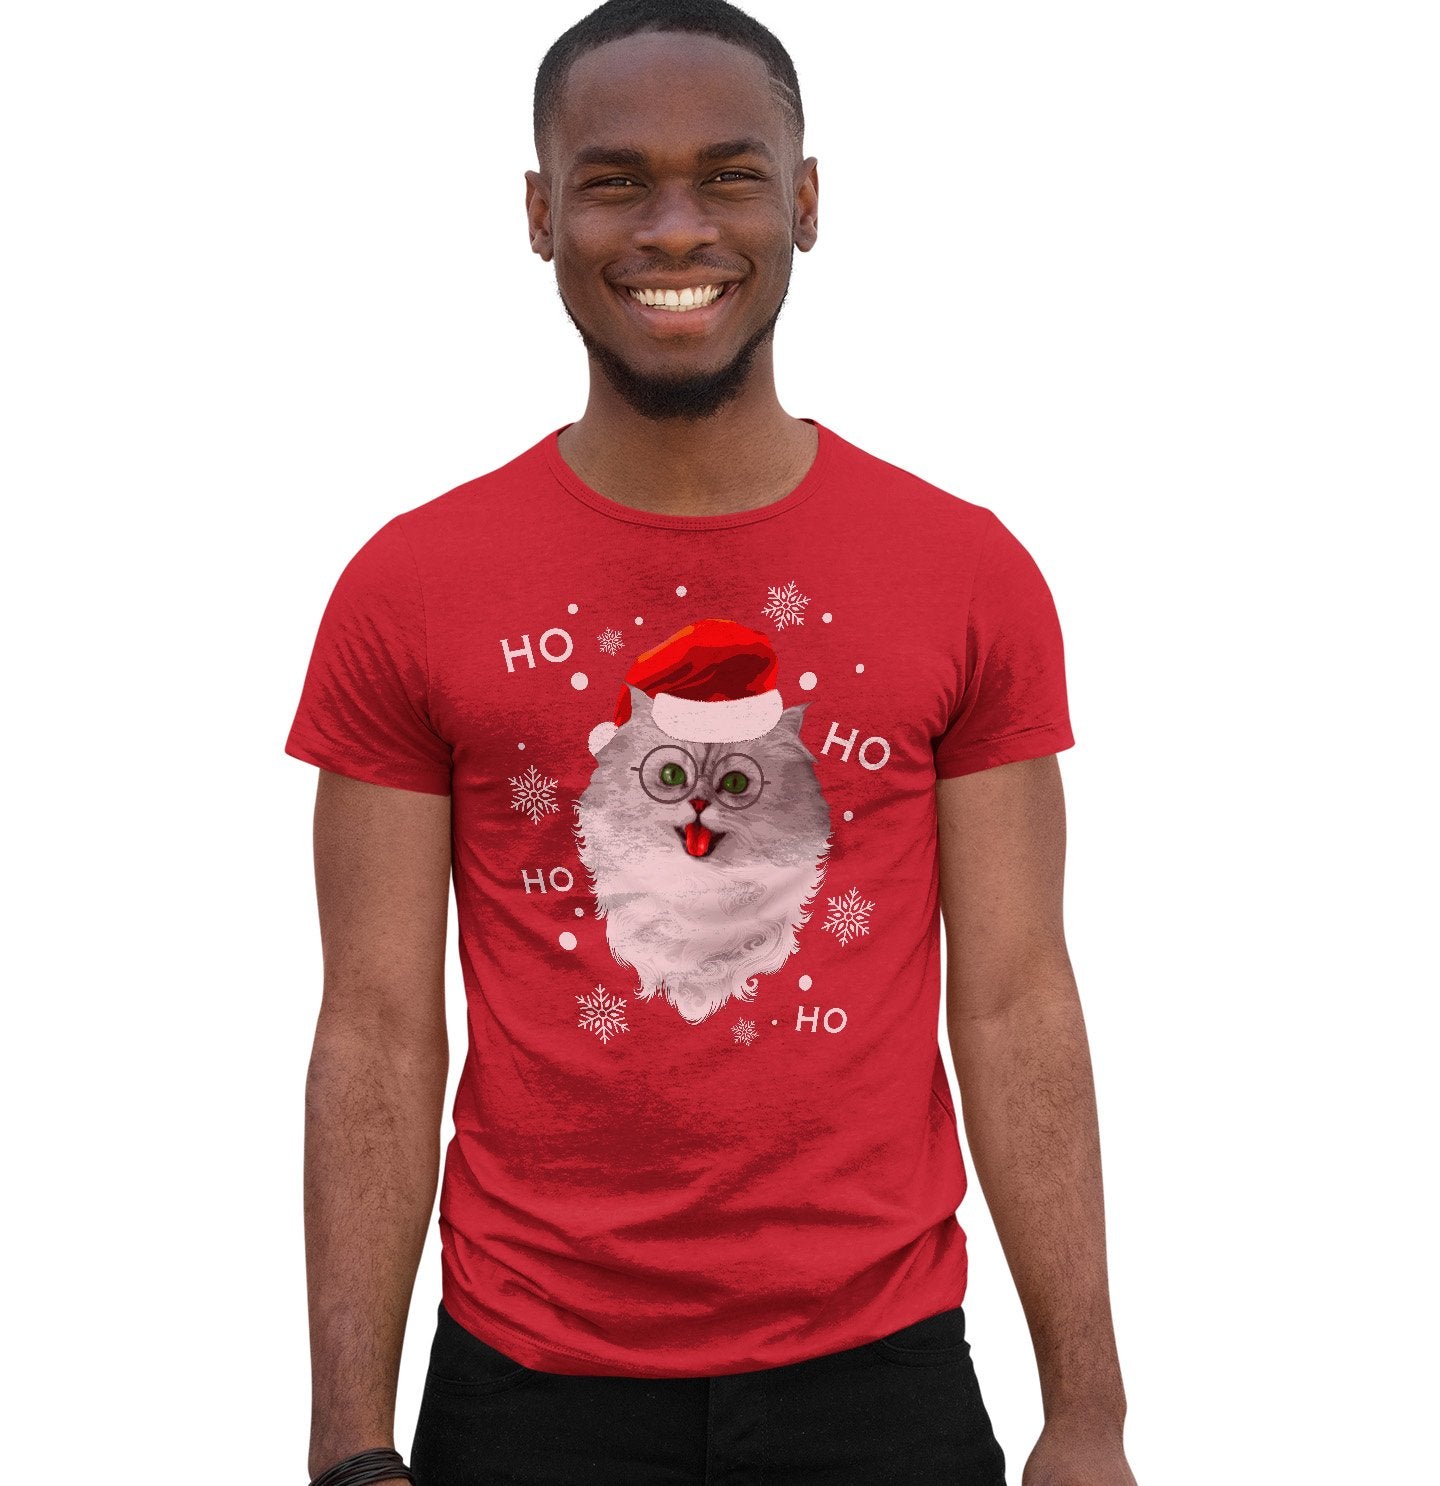 Animal Pride - Santa Cat - Adult Unisex T-Shirt